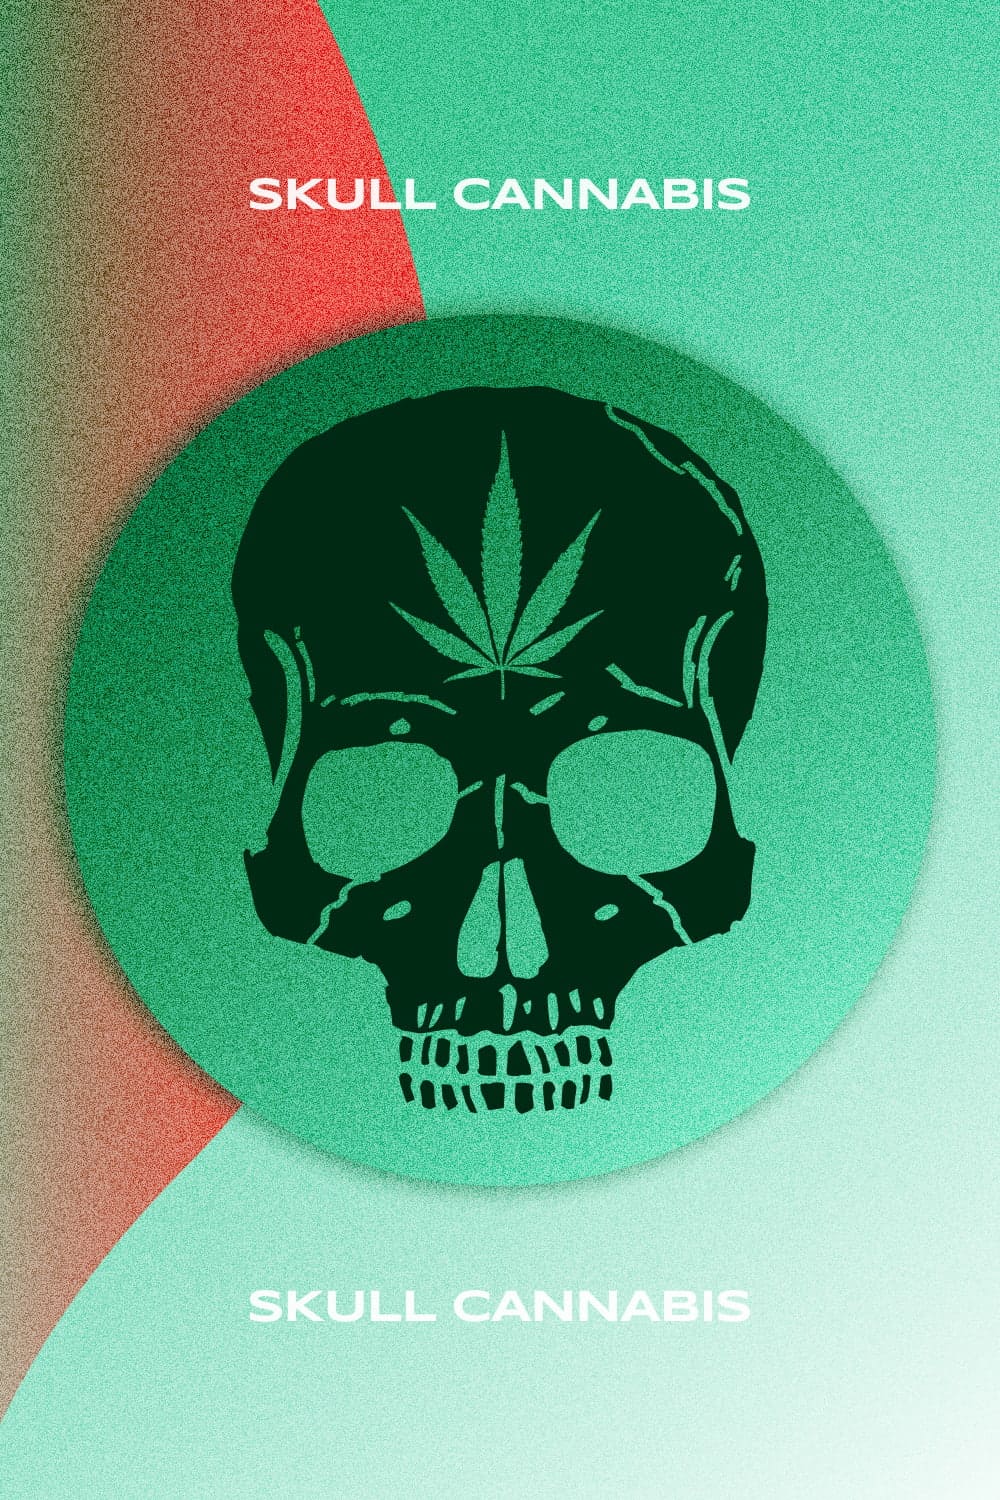 skull cannabis pinterest image.